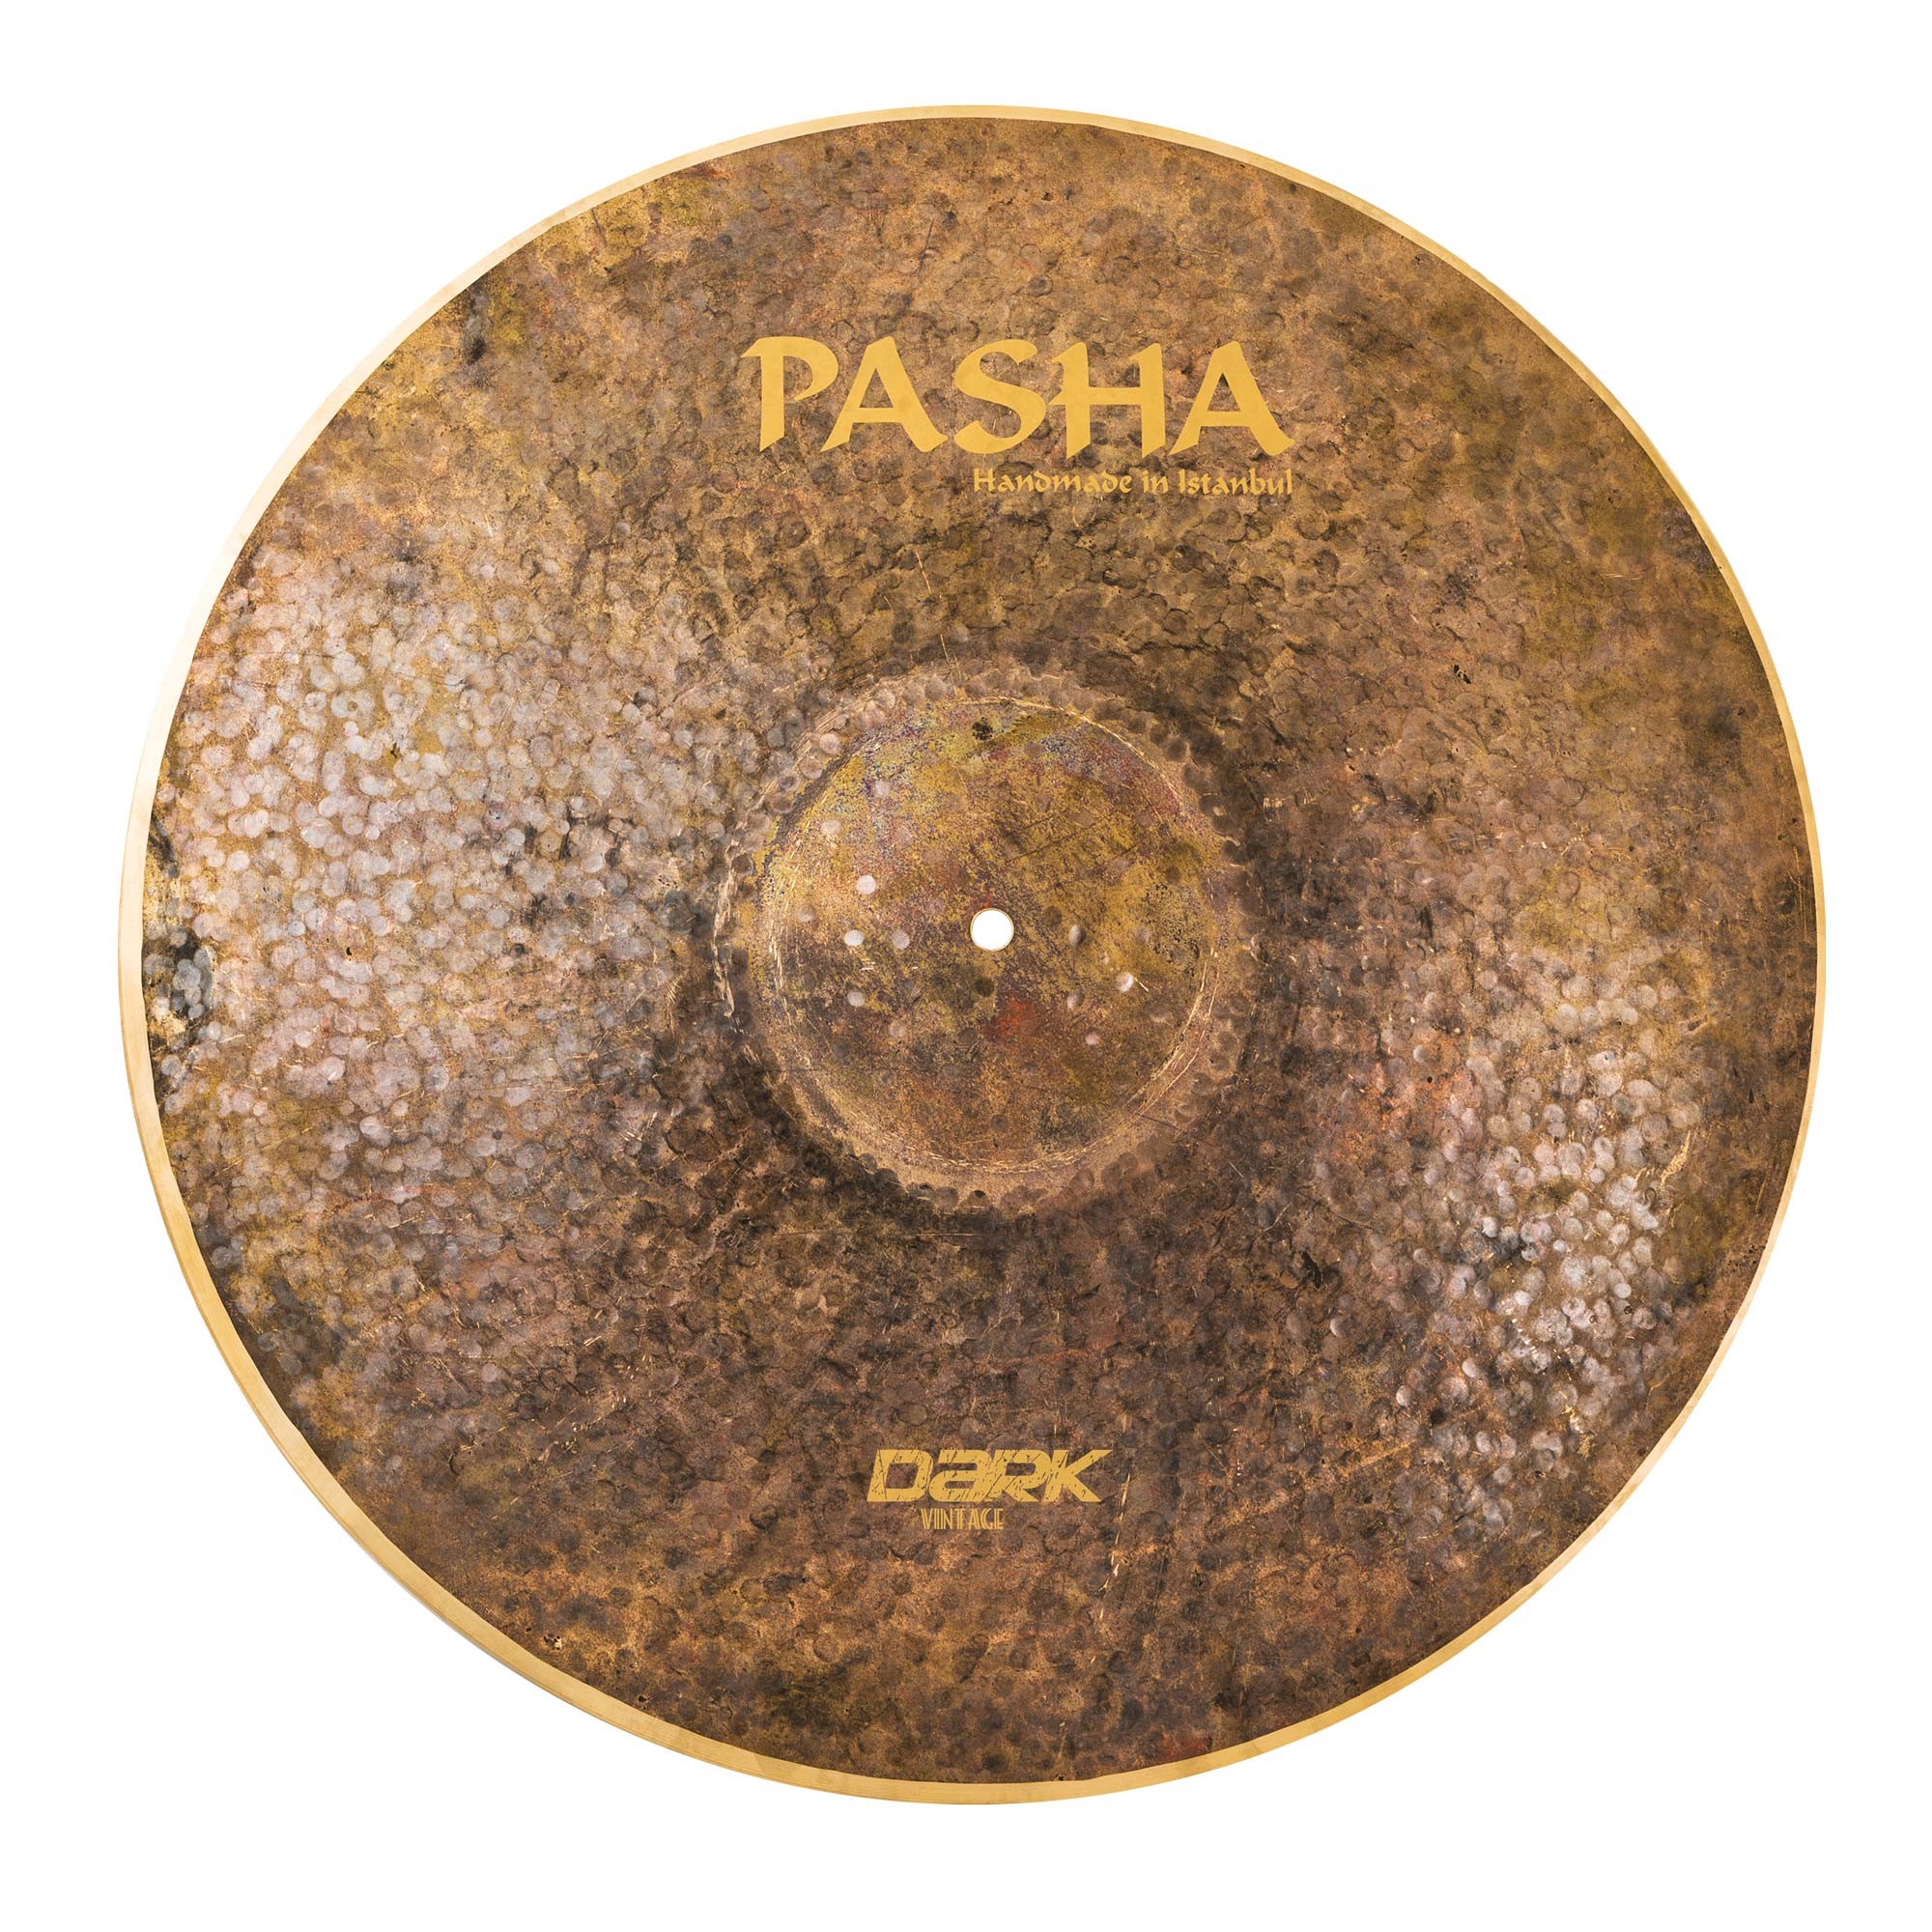 PASHA Pasha Dark Vintage Ride DVT-R24 Dimensione: 24''